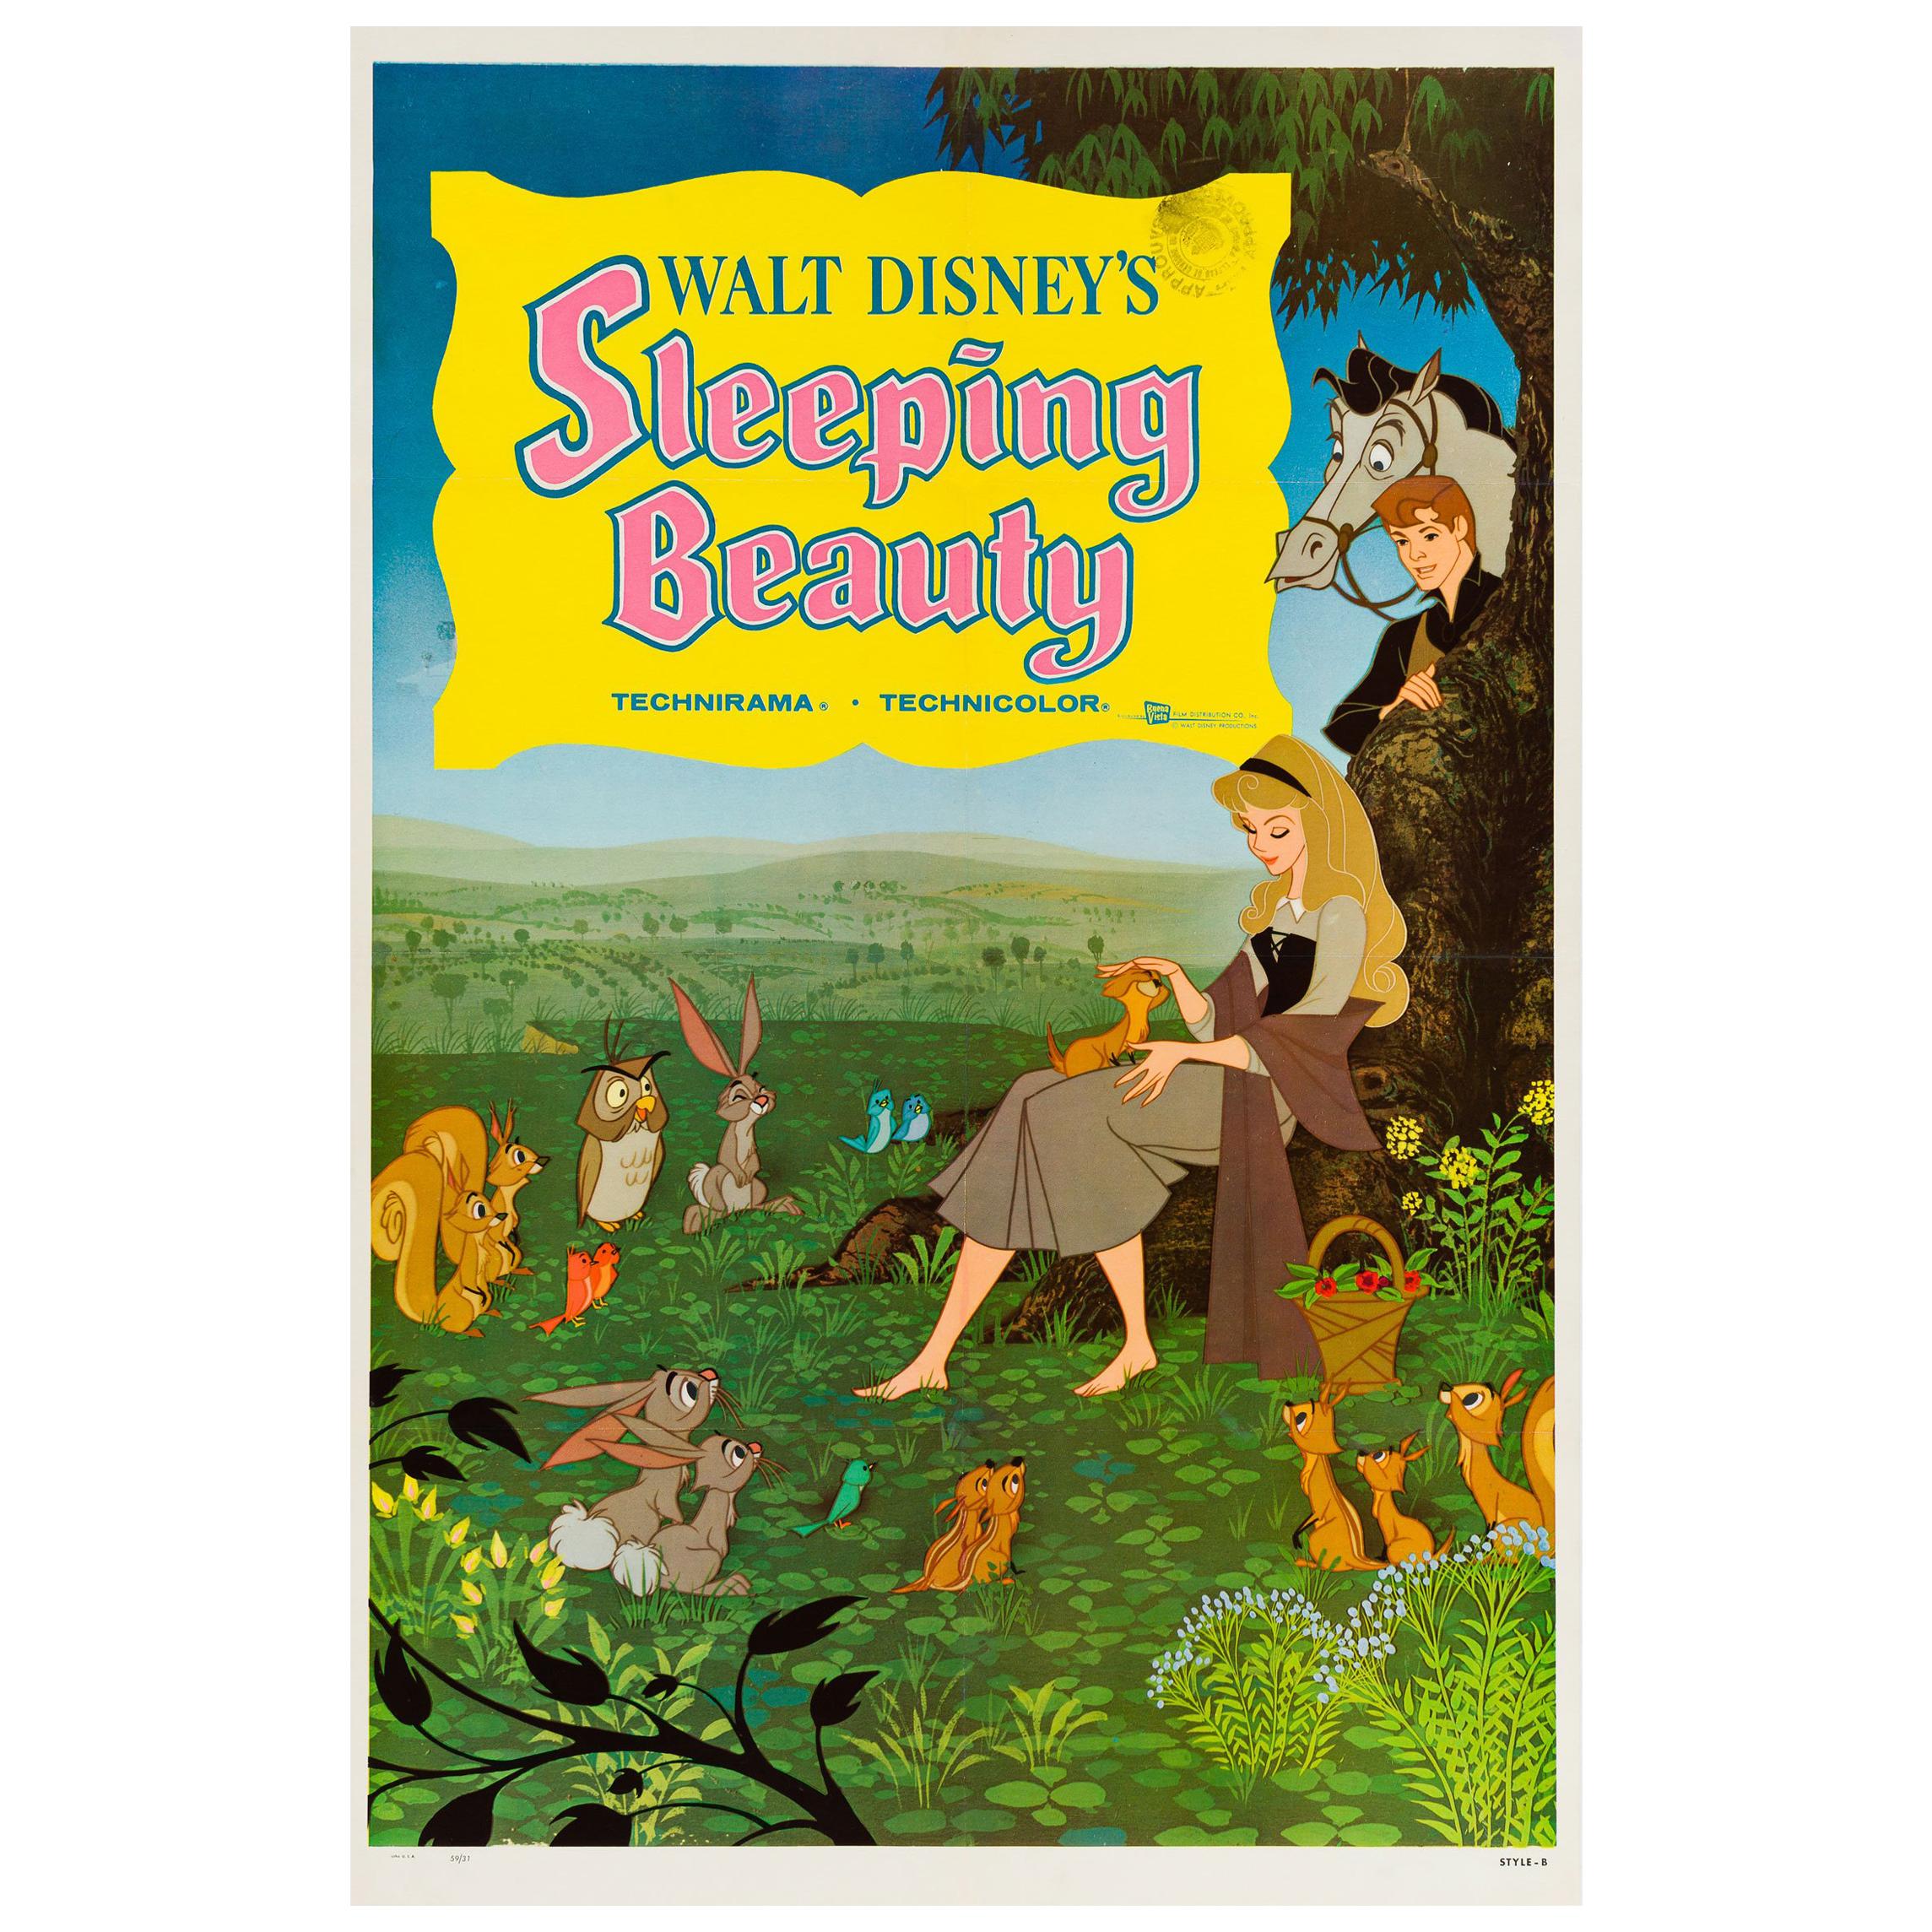 Sleeping Beauty Original American Film Poster, 1959